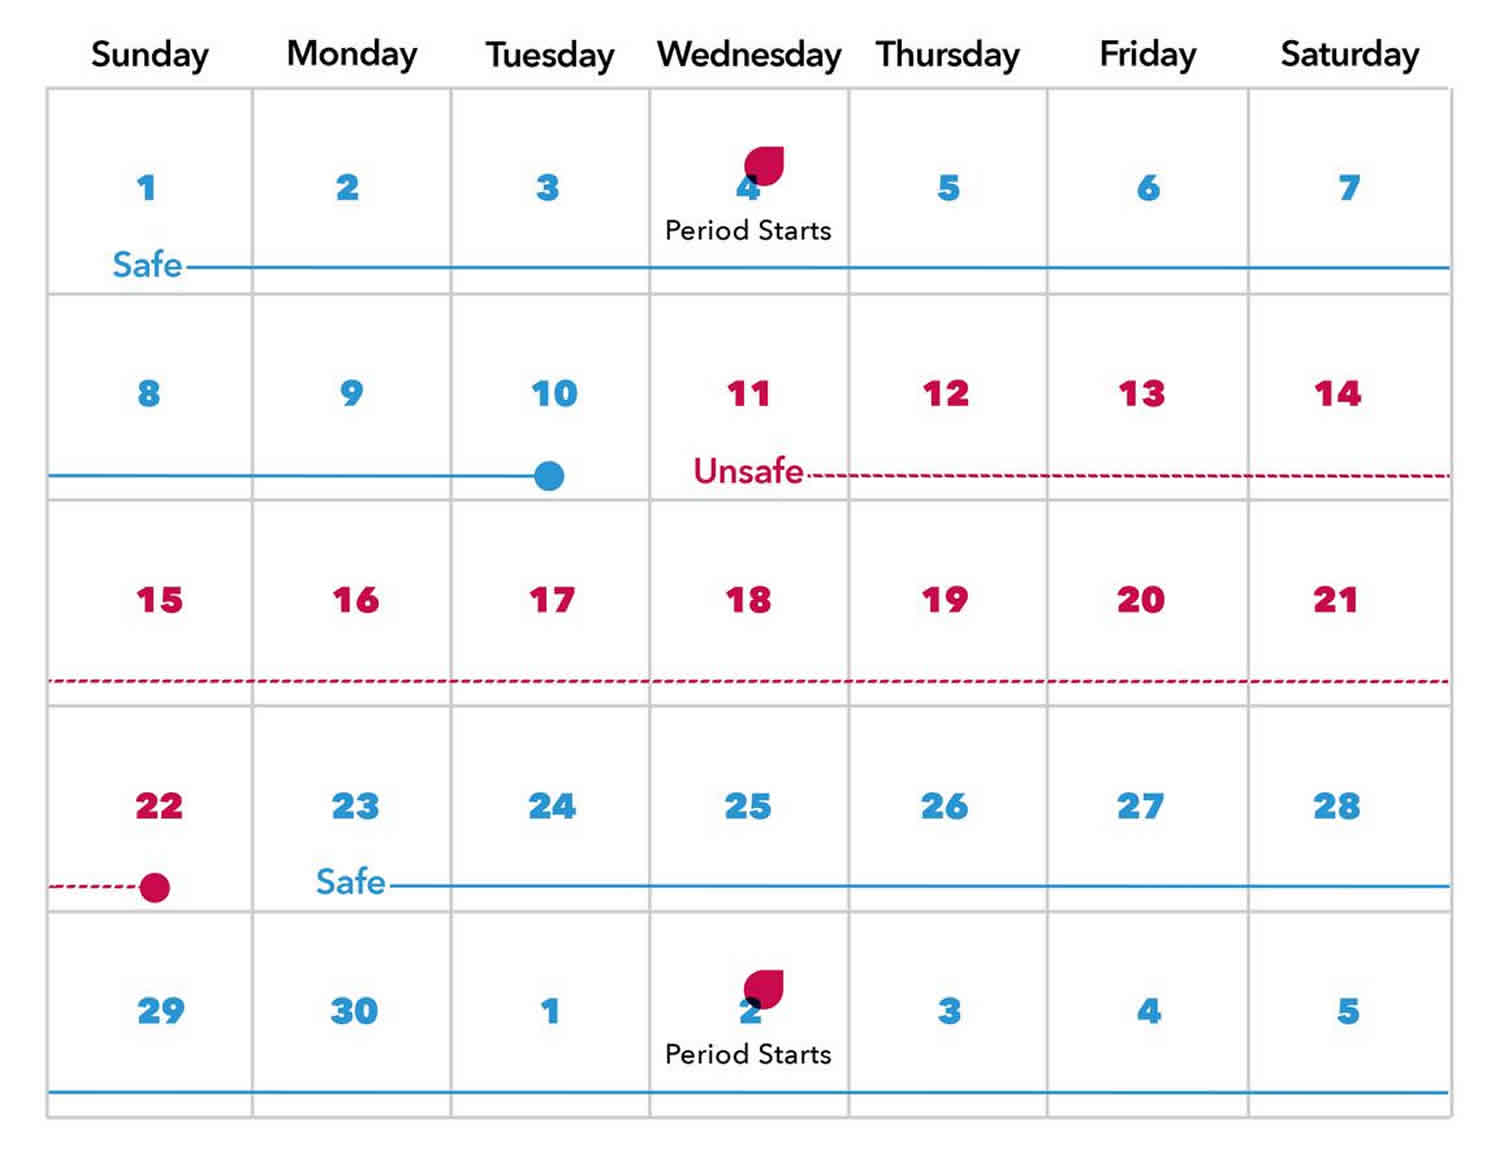 Calendar Method Fertility Chart